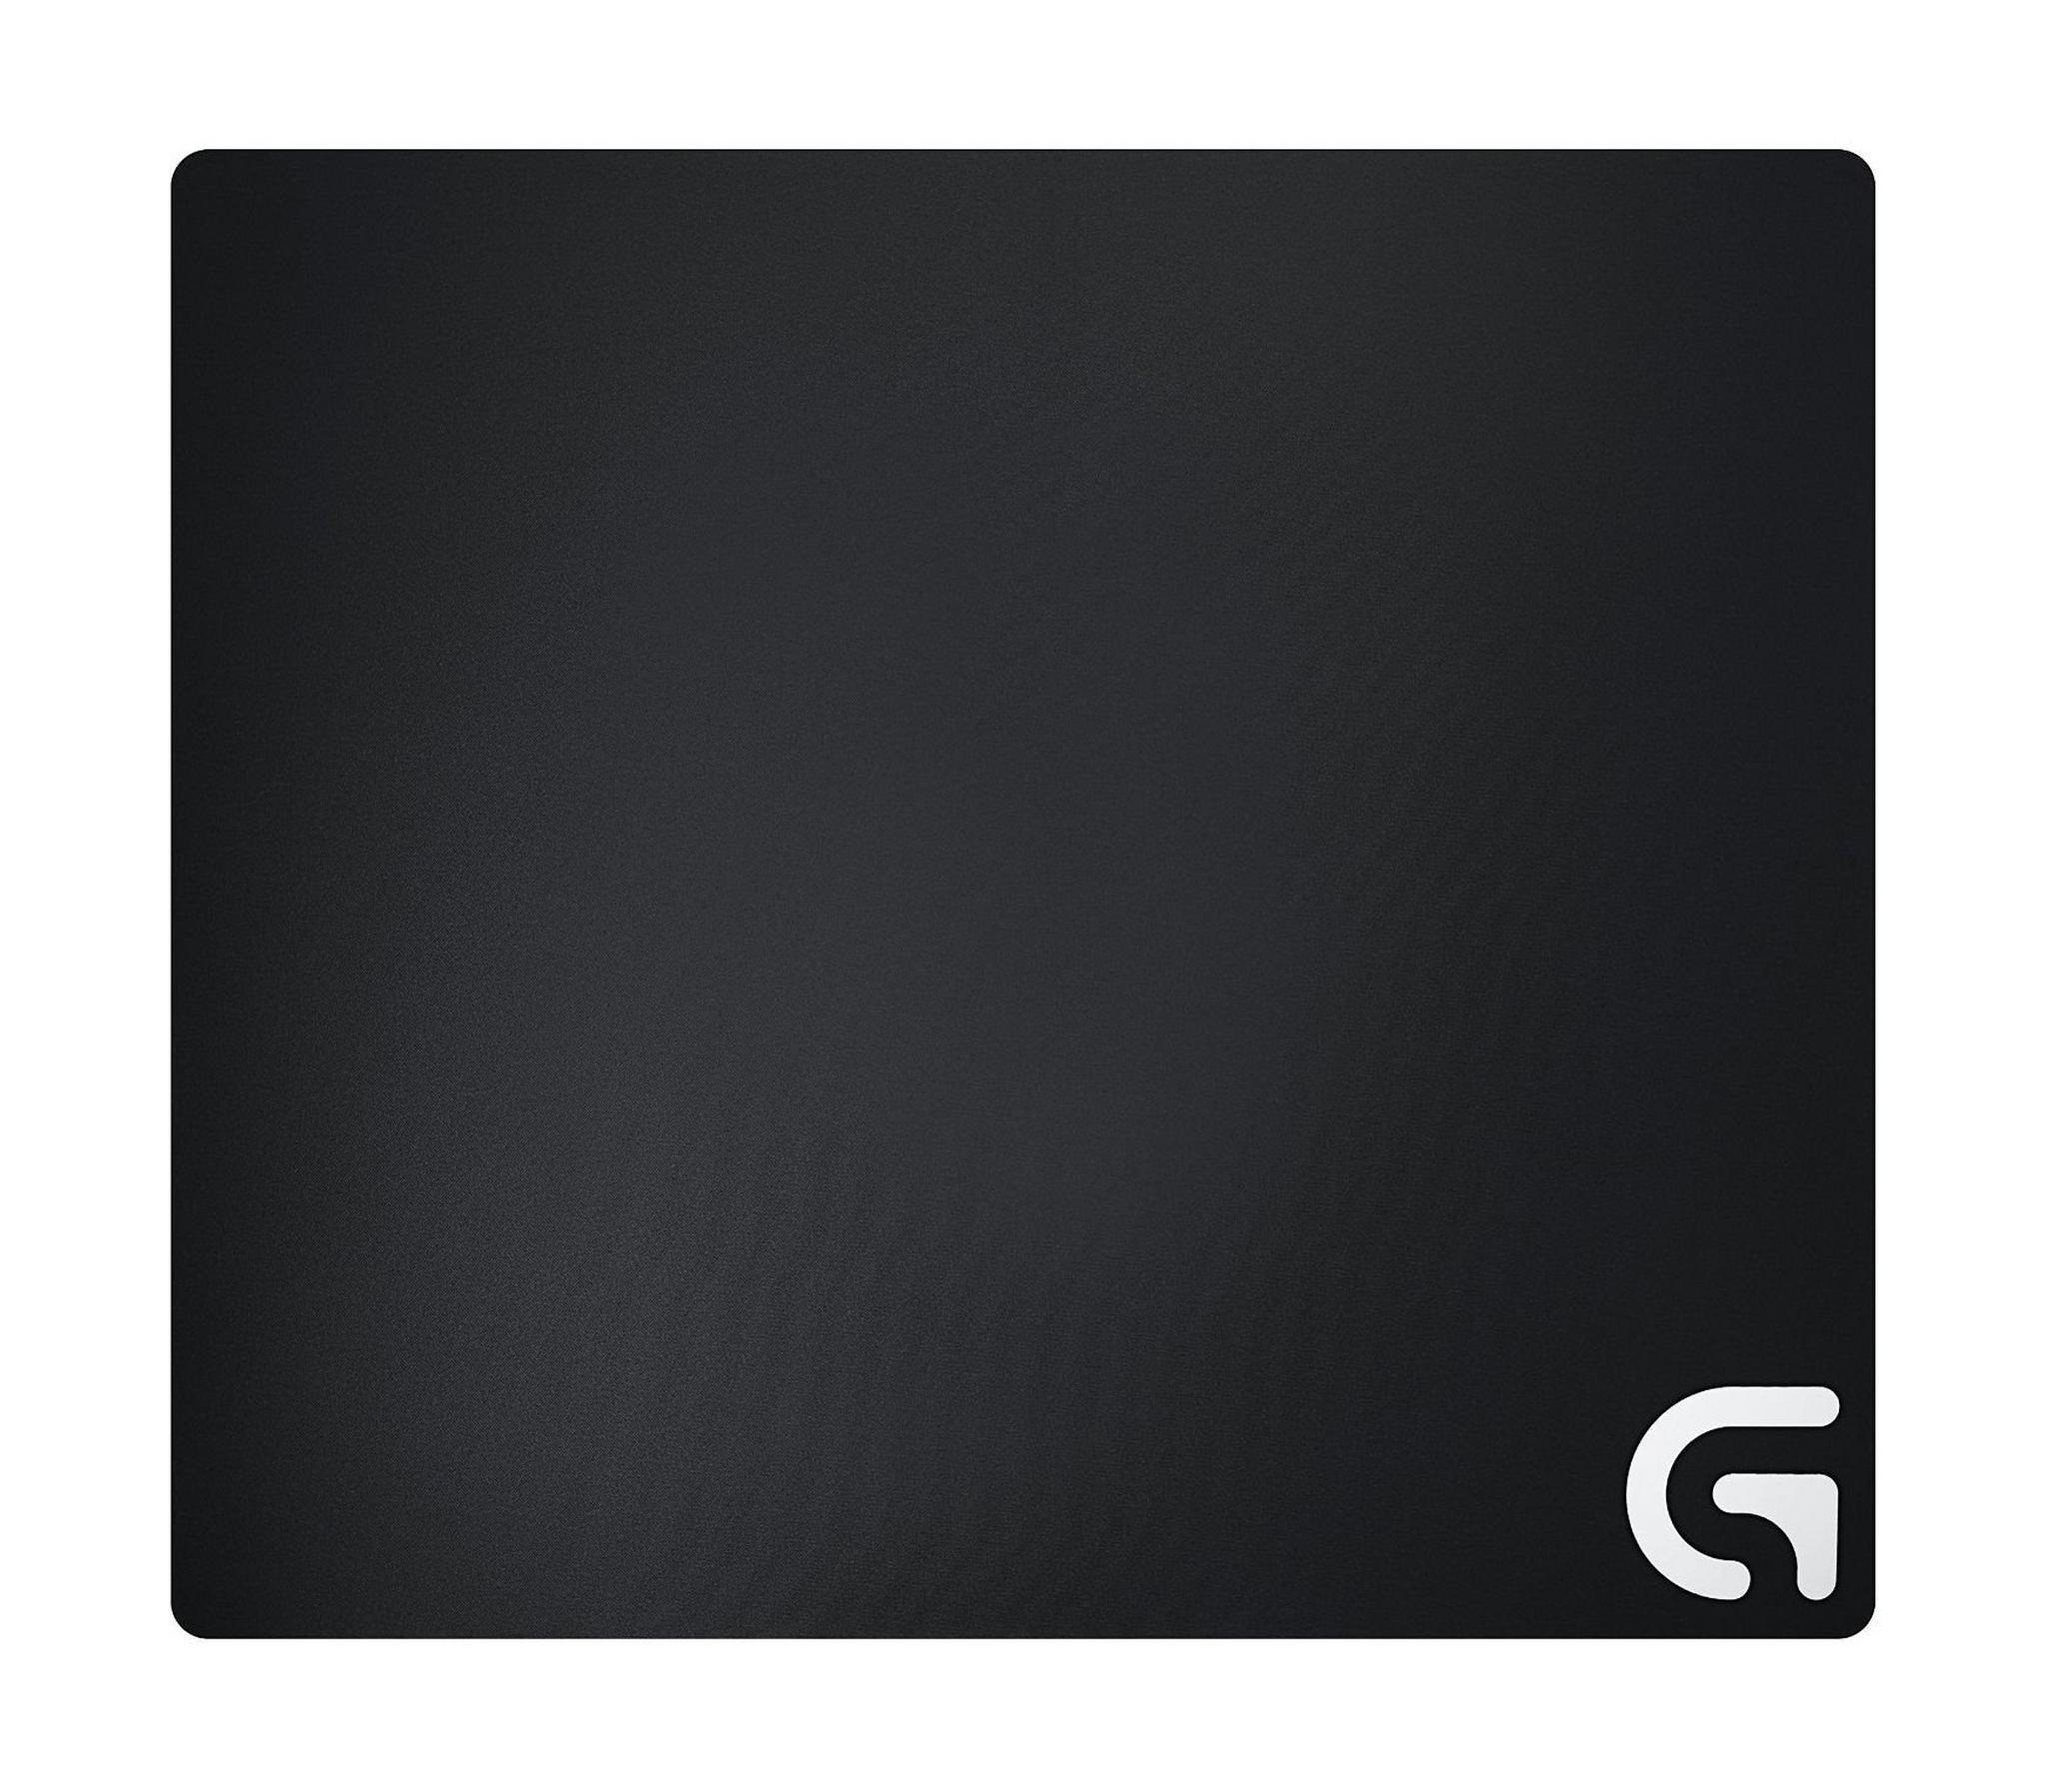 Logitech G640 Cloth Gaming Mouse Pad (943-000090) - Black